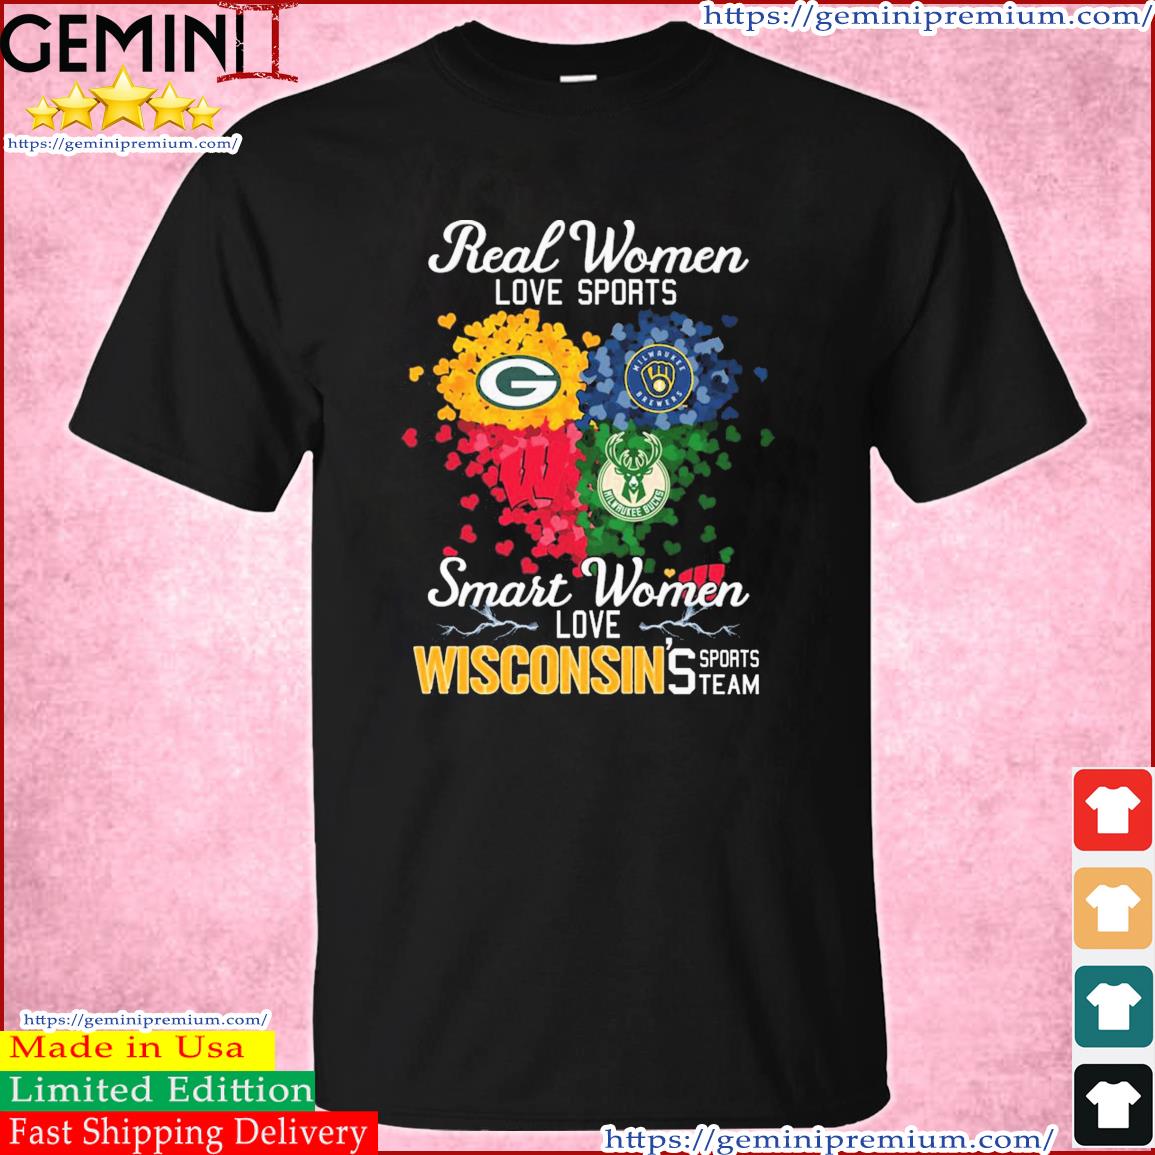 Real Women Love Sports Smart Women Love Wisconsin's Sports Team Shirt